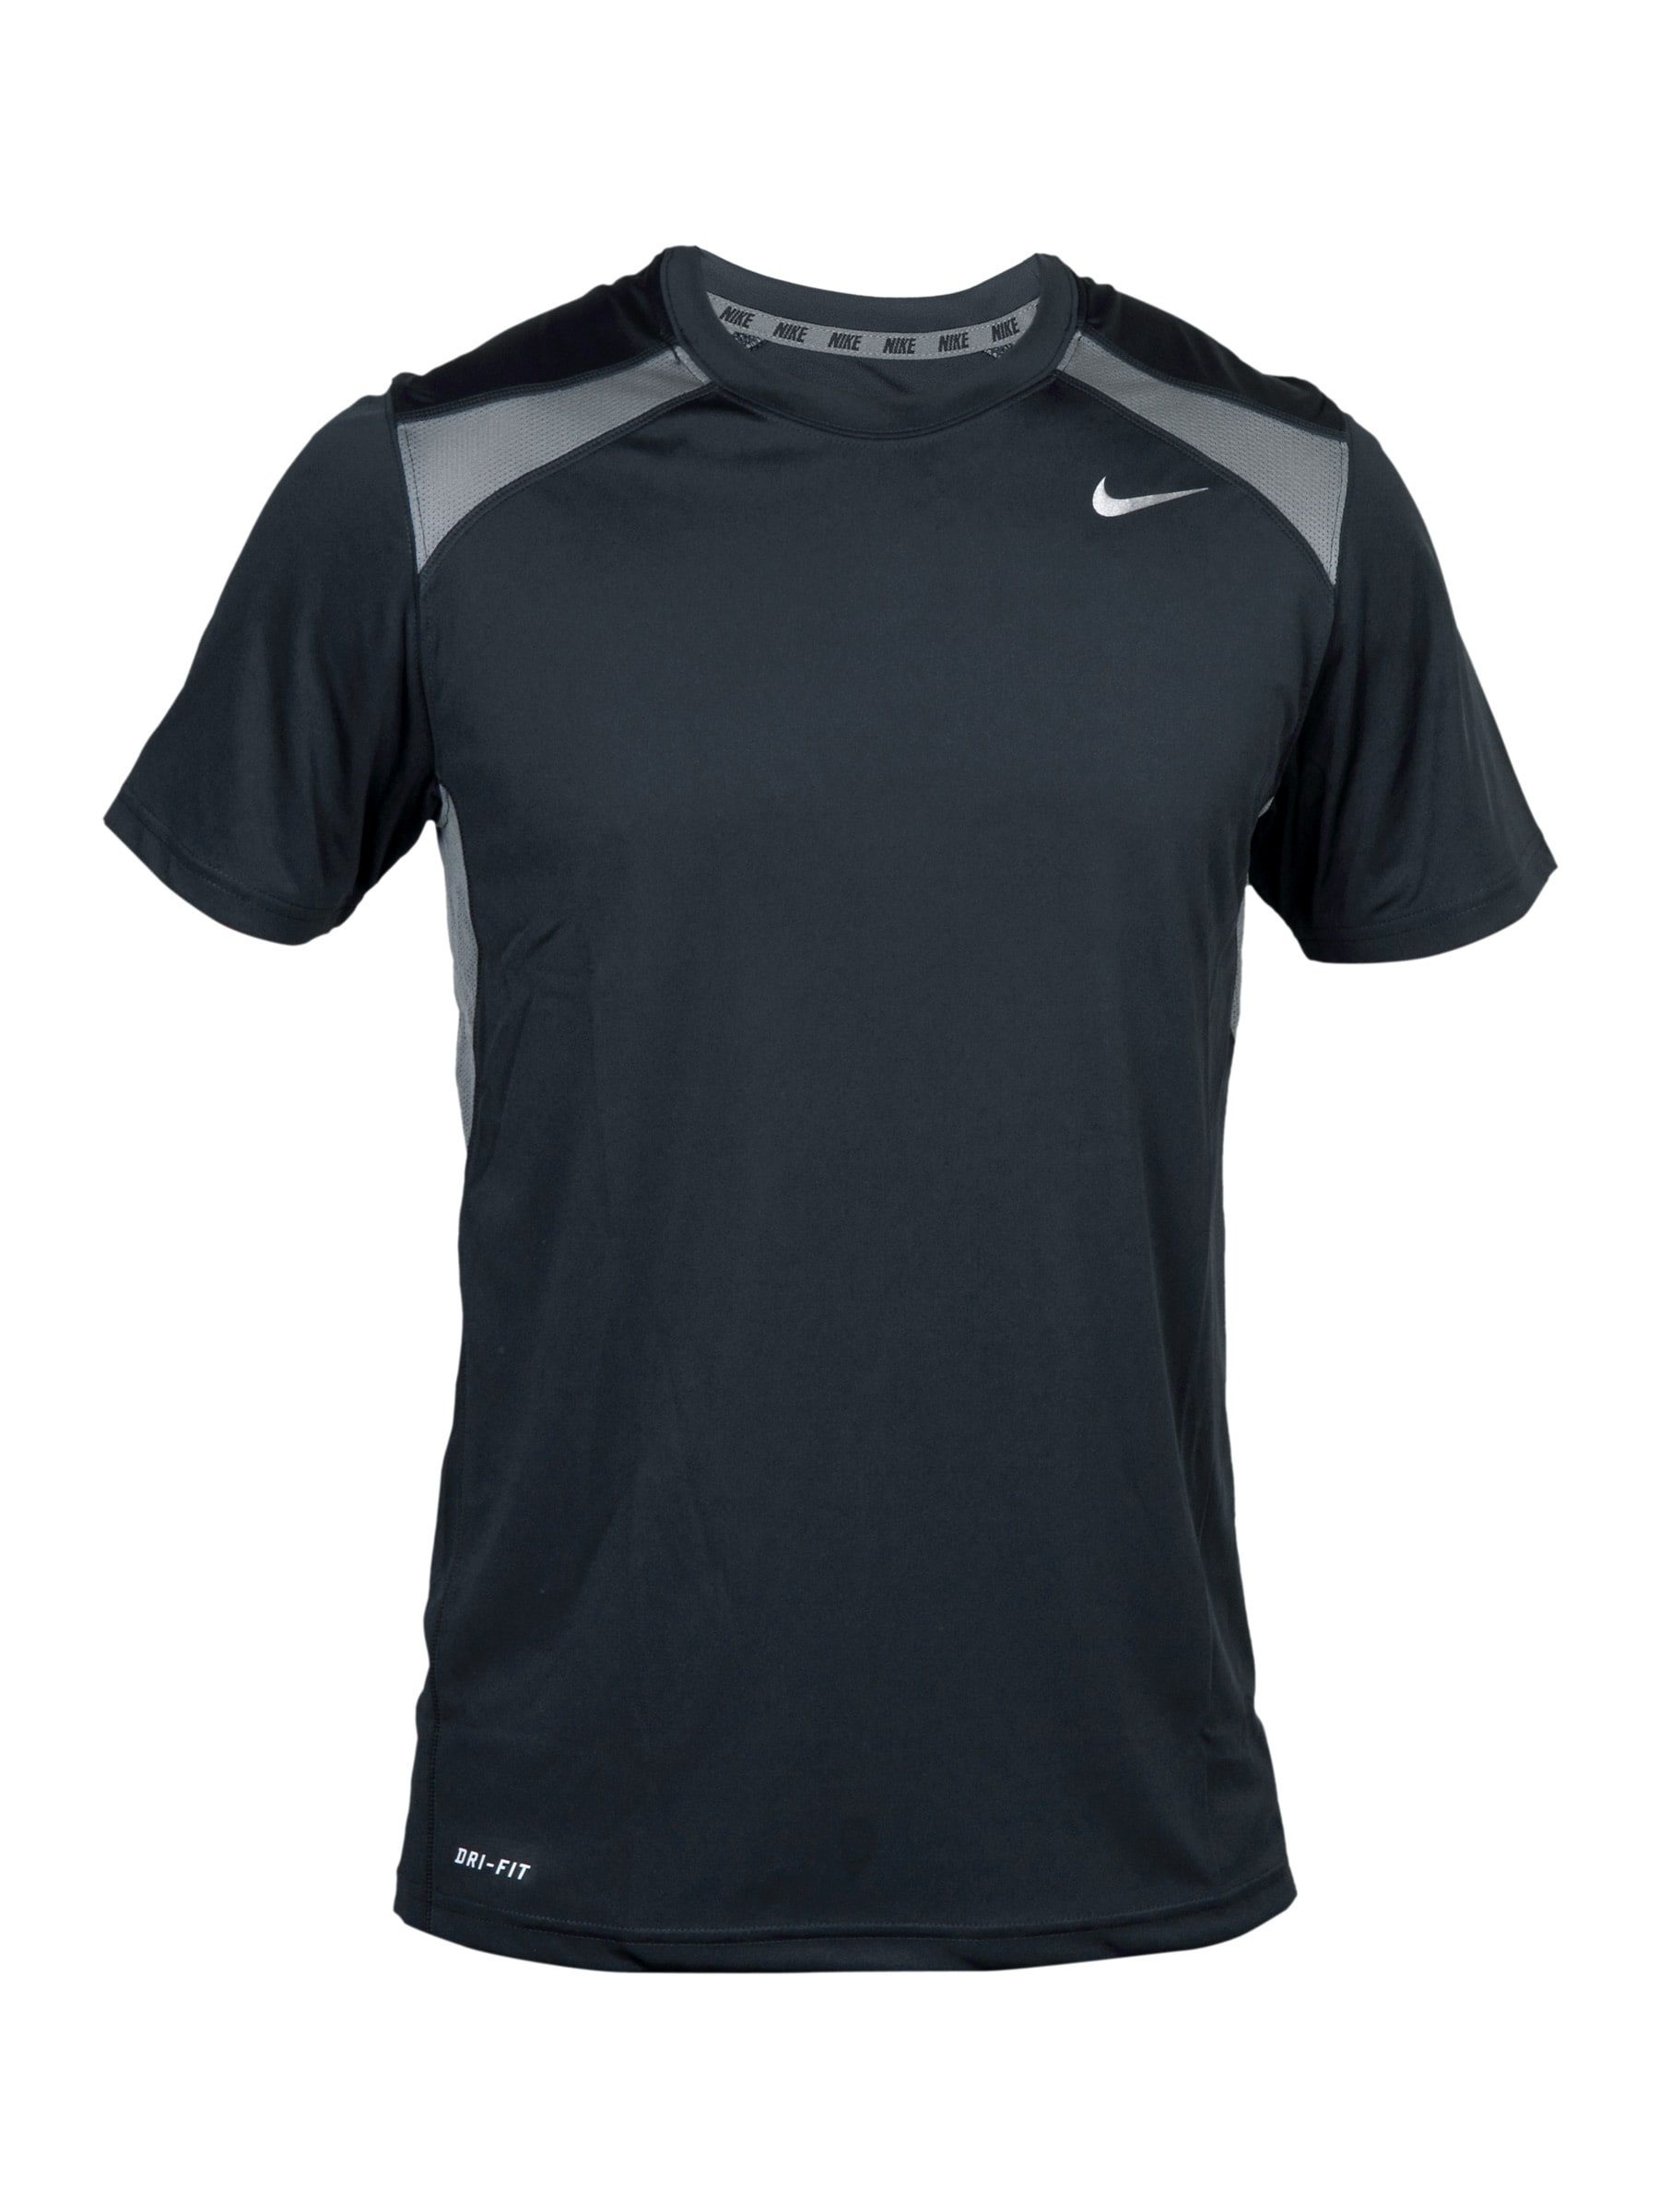 Nike Men's As Walkthrough Black-Grey T-shirt